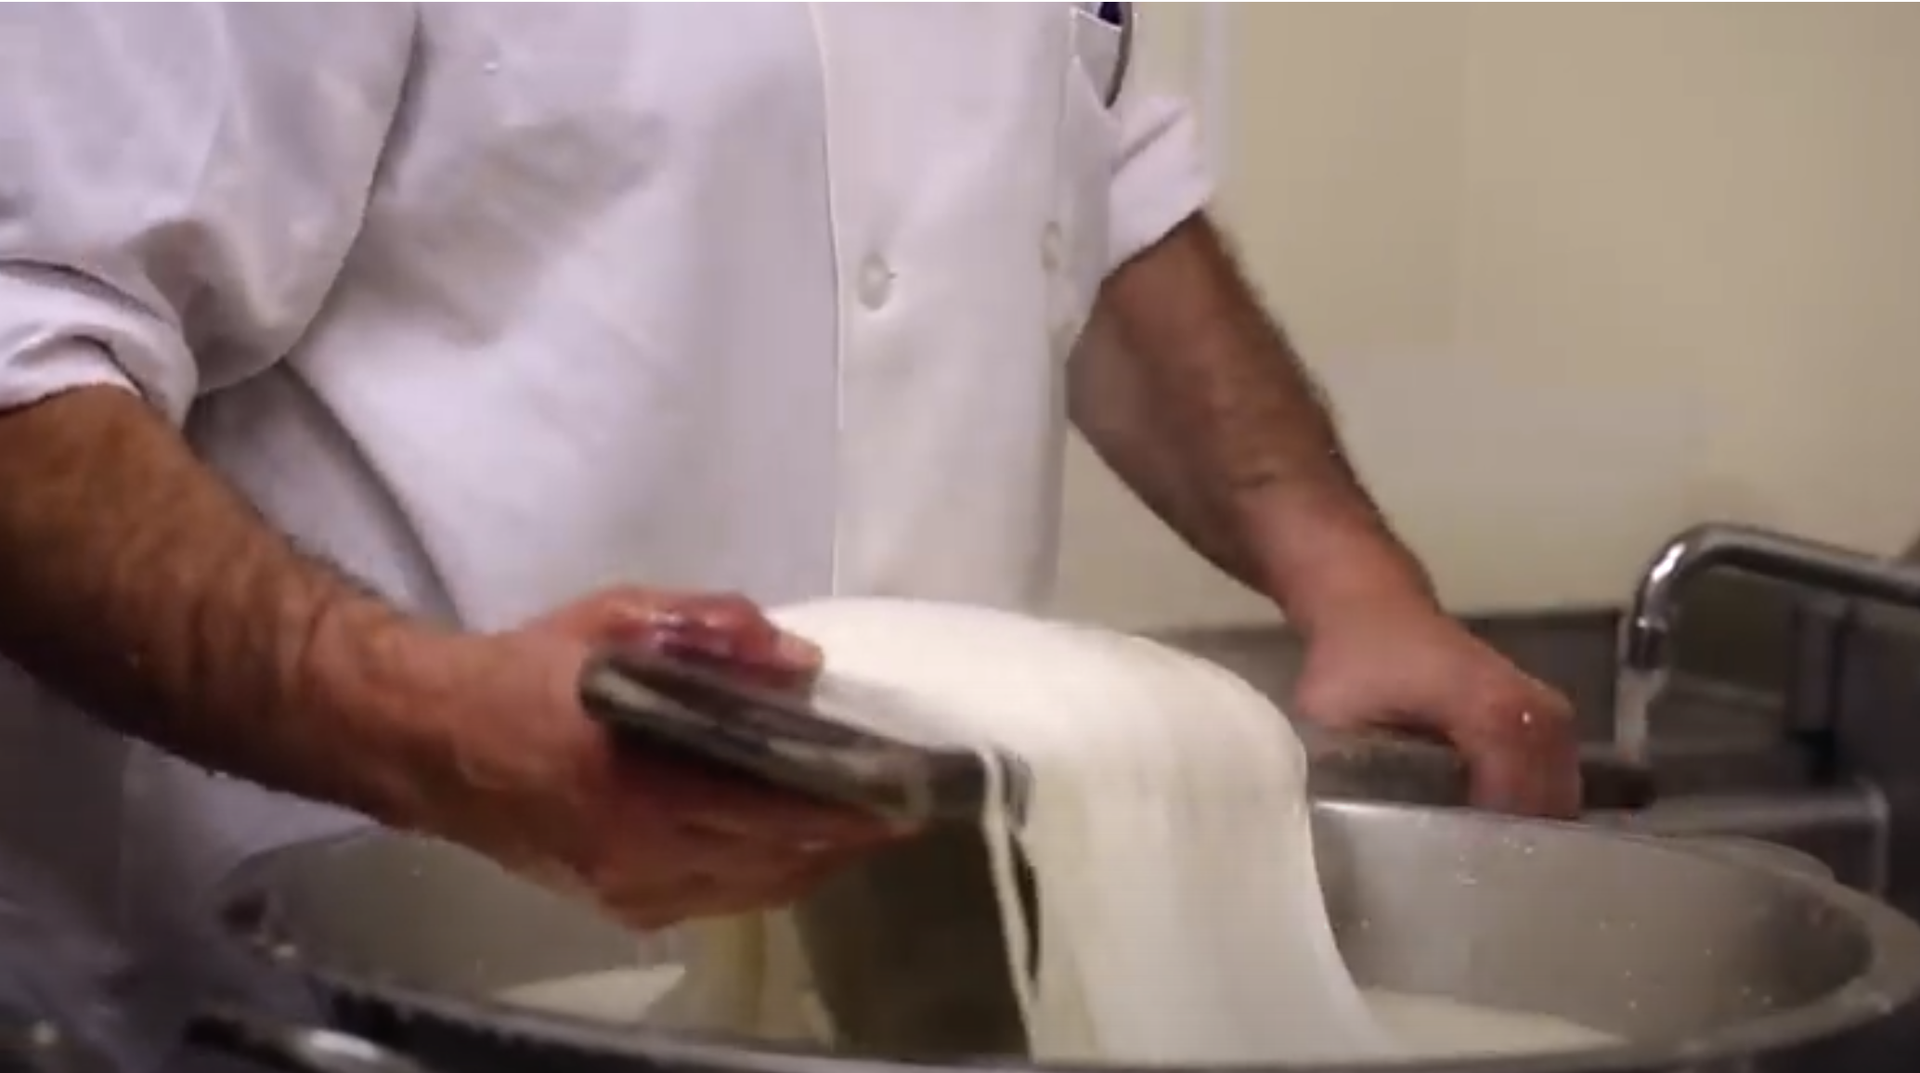 How Mozzarella Is Made